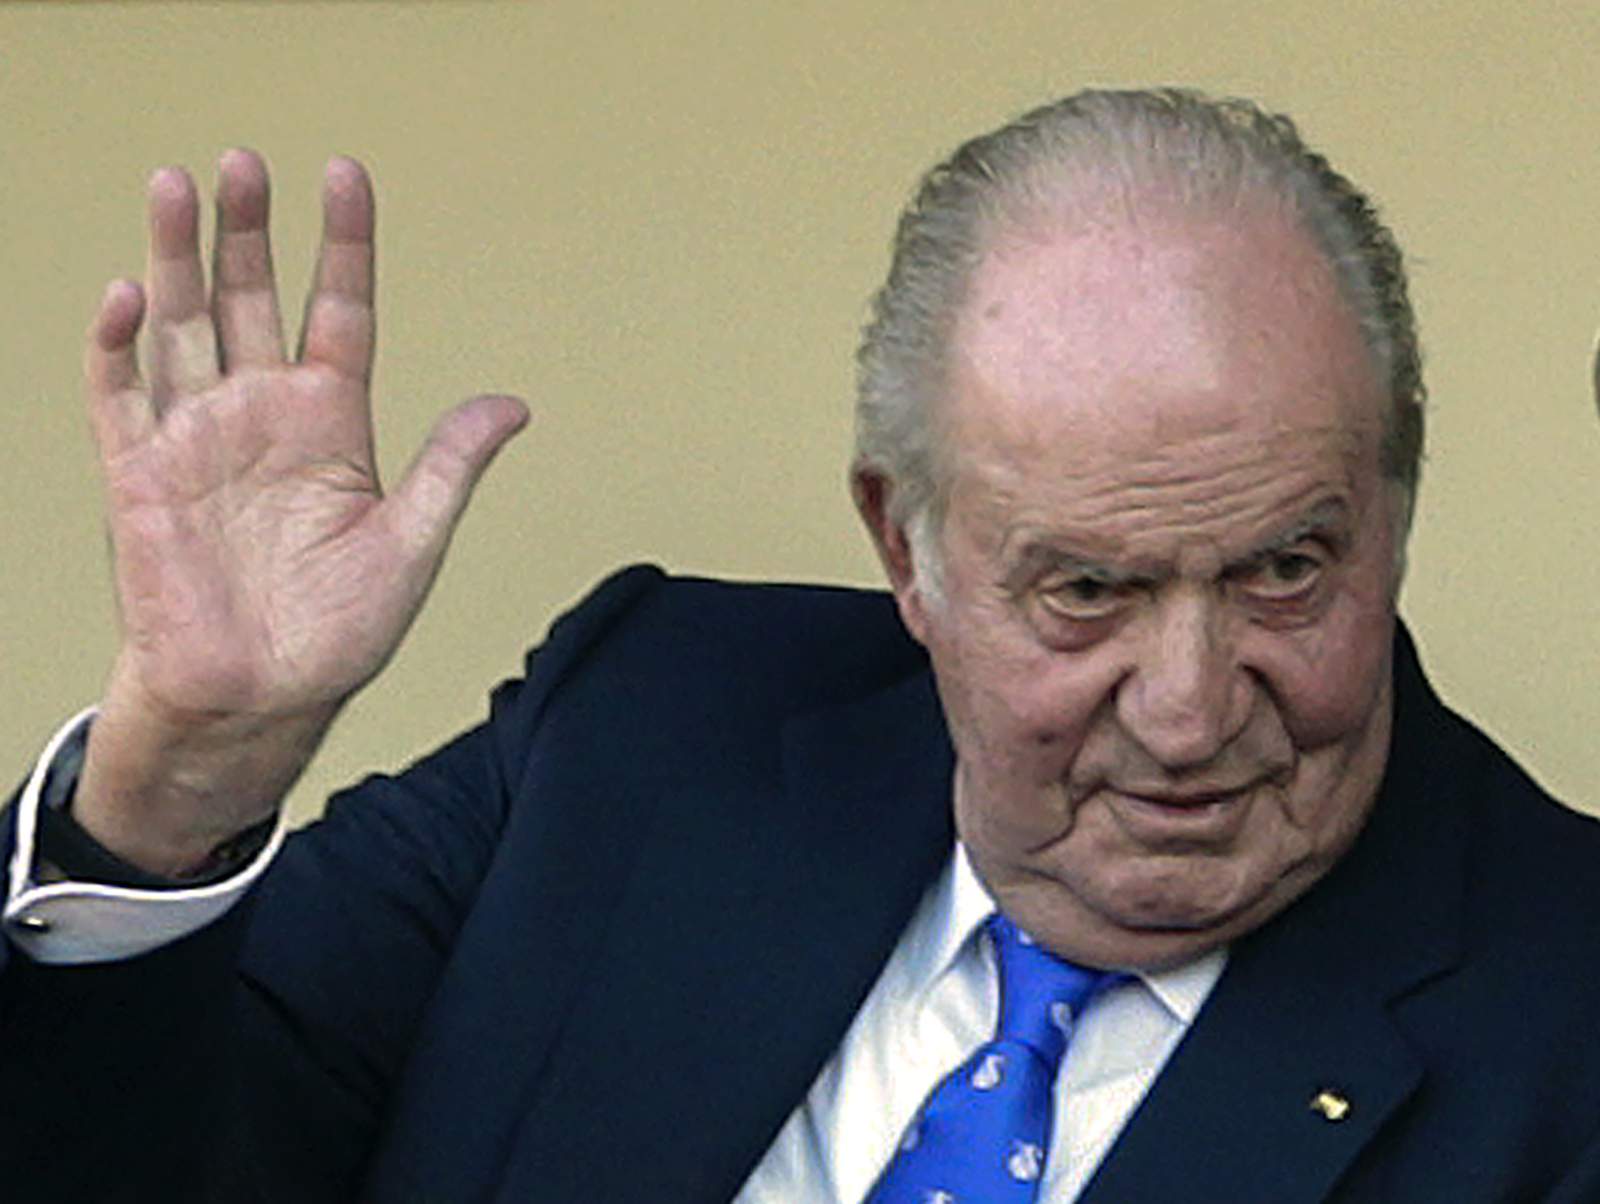 Spain: Ex-King Juan Carlos I won't get special treatment